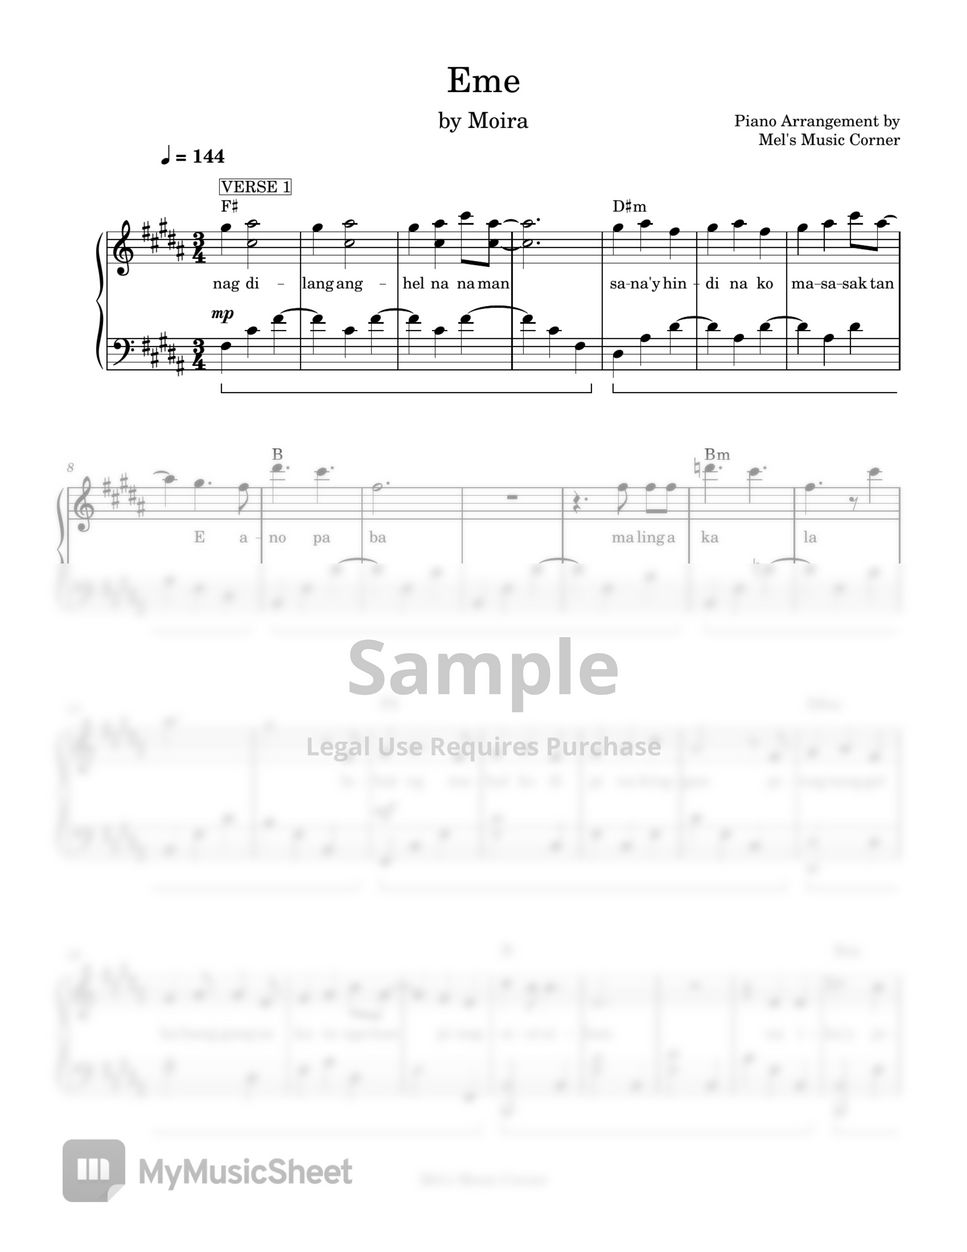 Moira dela Torre - Eme (piano sheet music) by Mel's Music Corner